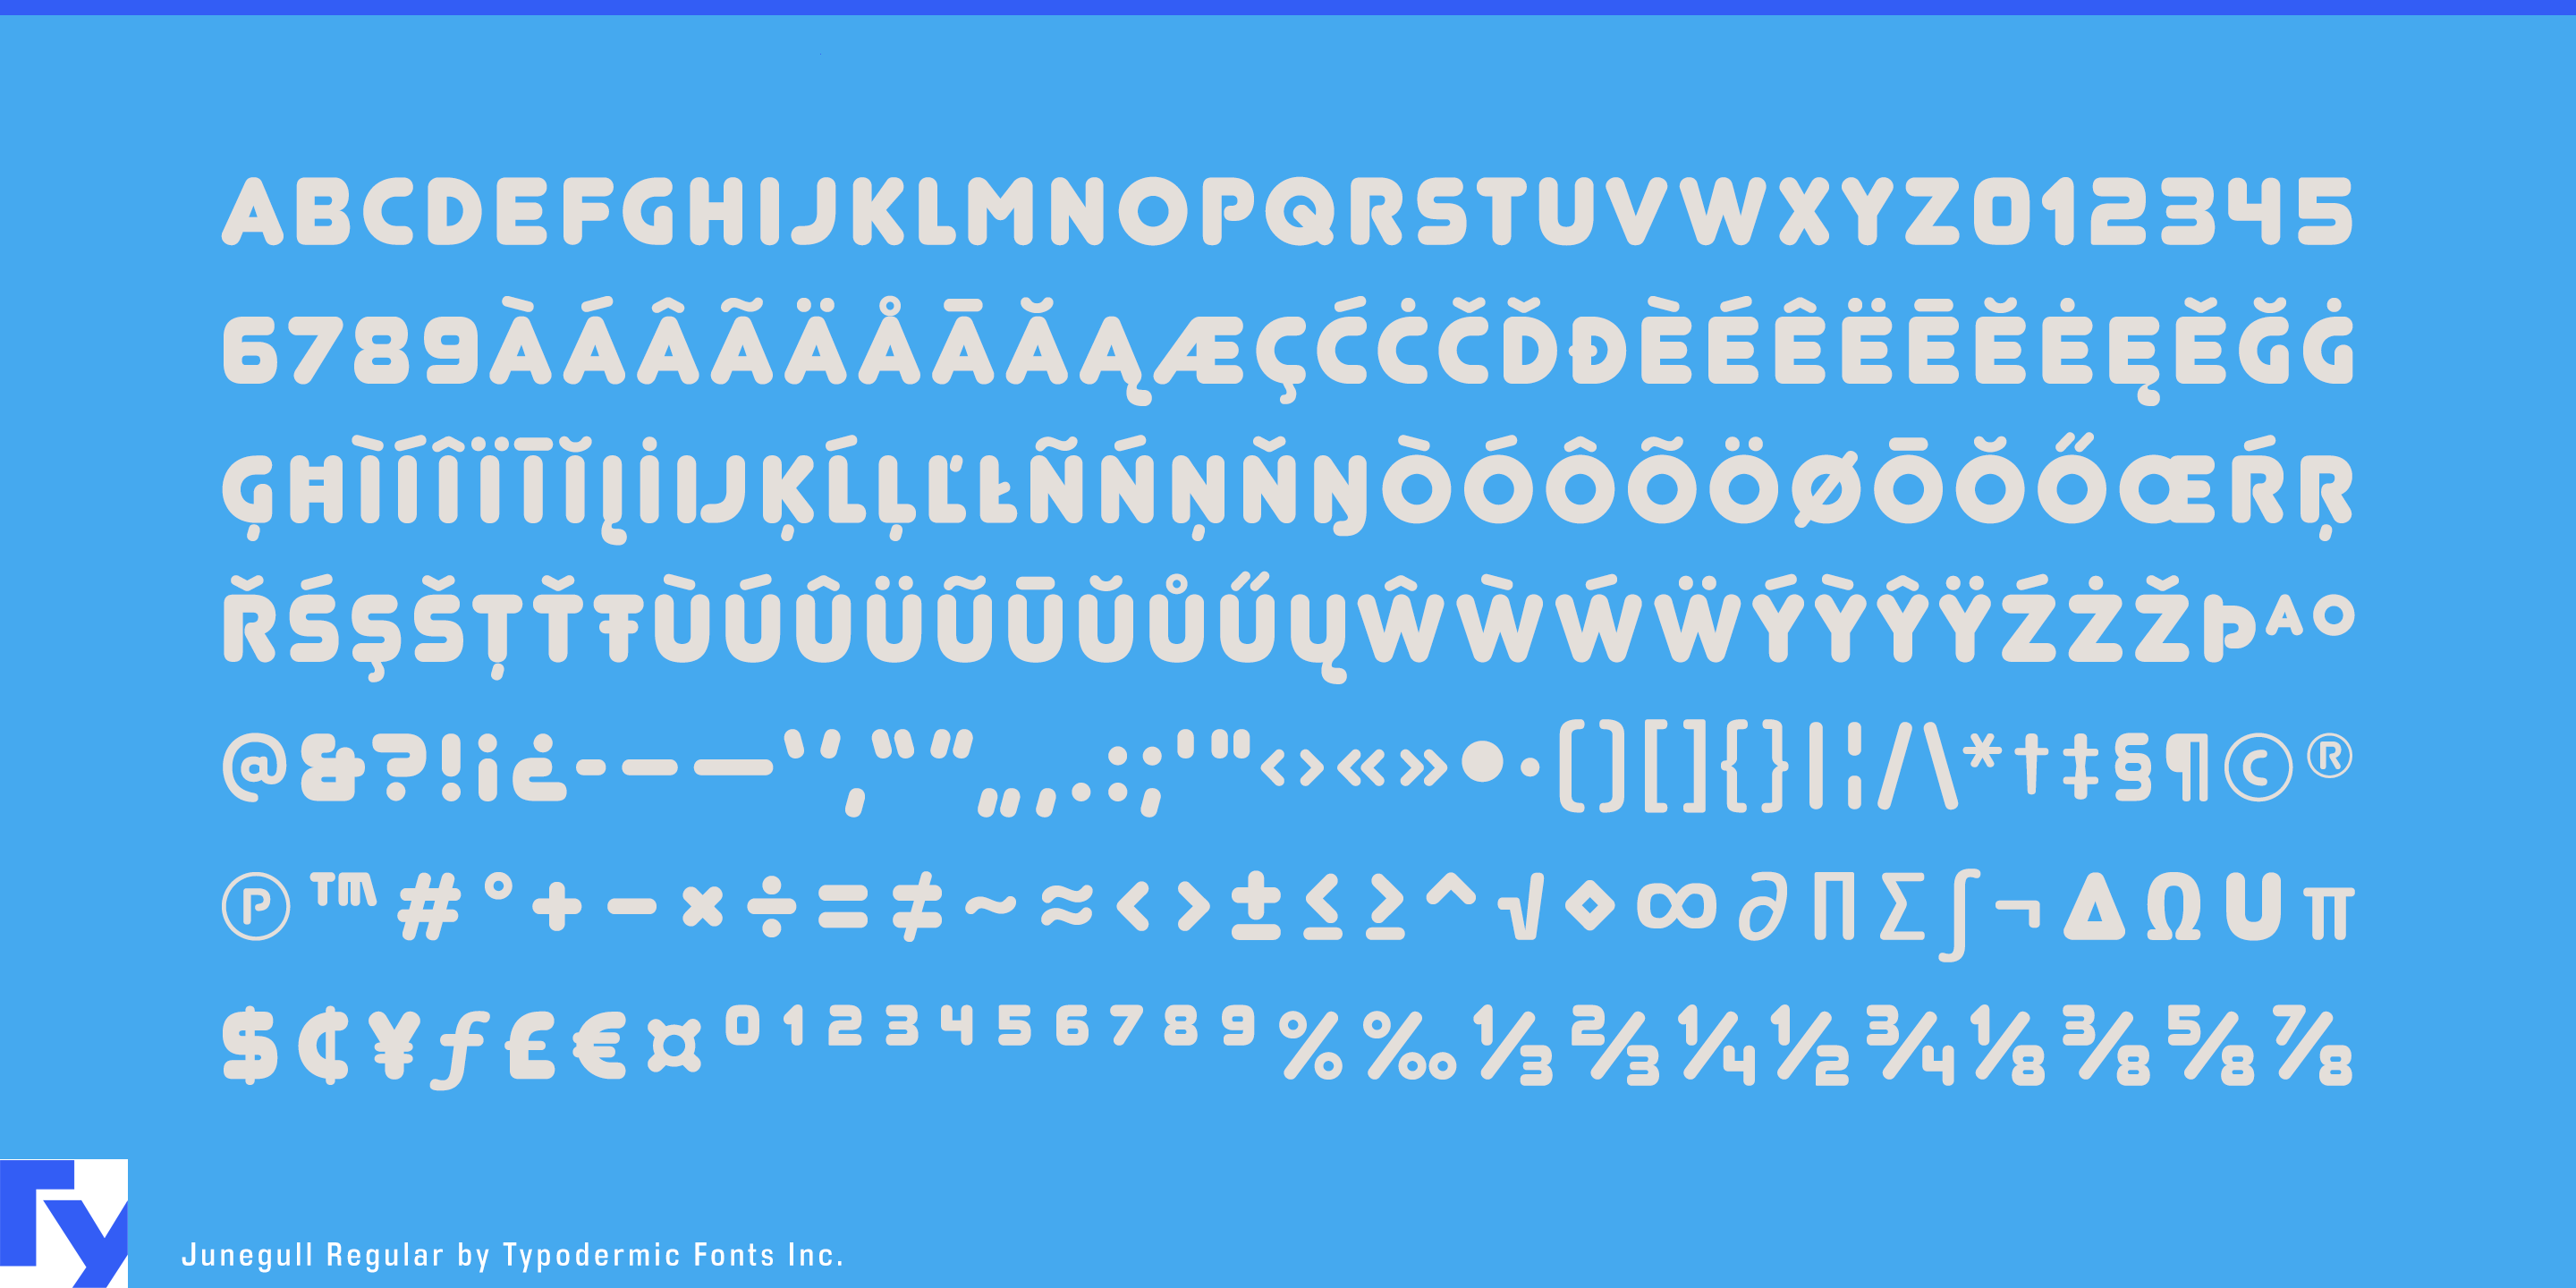 Extraordinary Design Possibilities: Junegull Typeface Ignites Inspiration